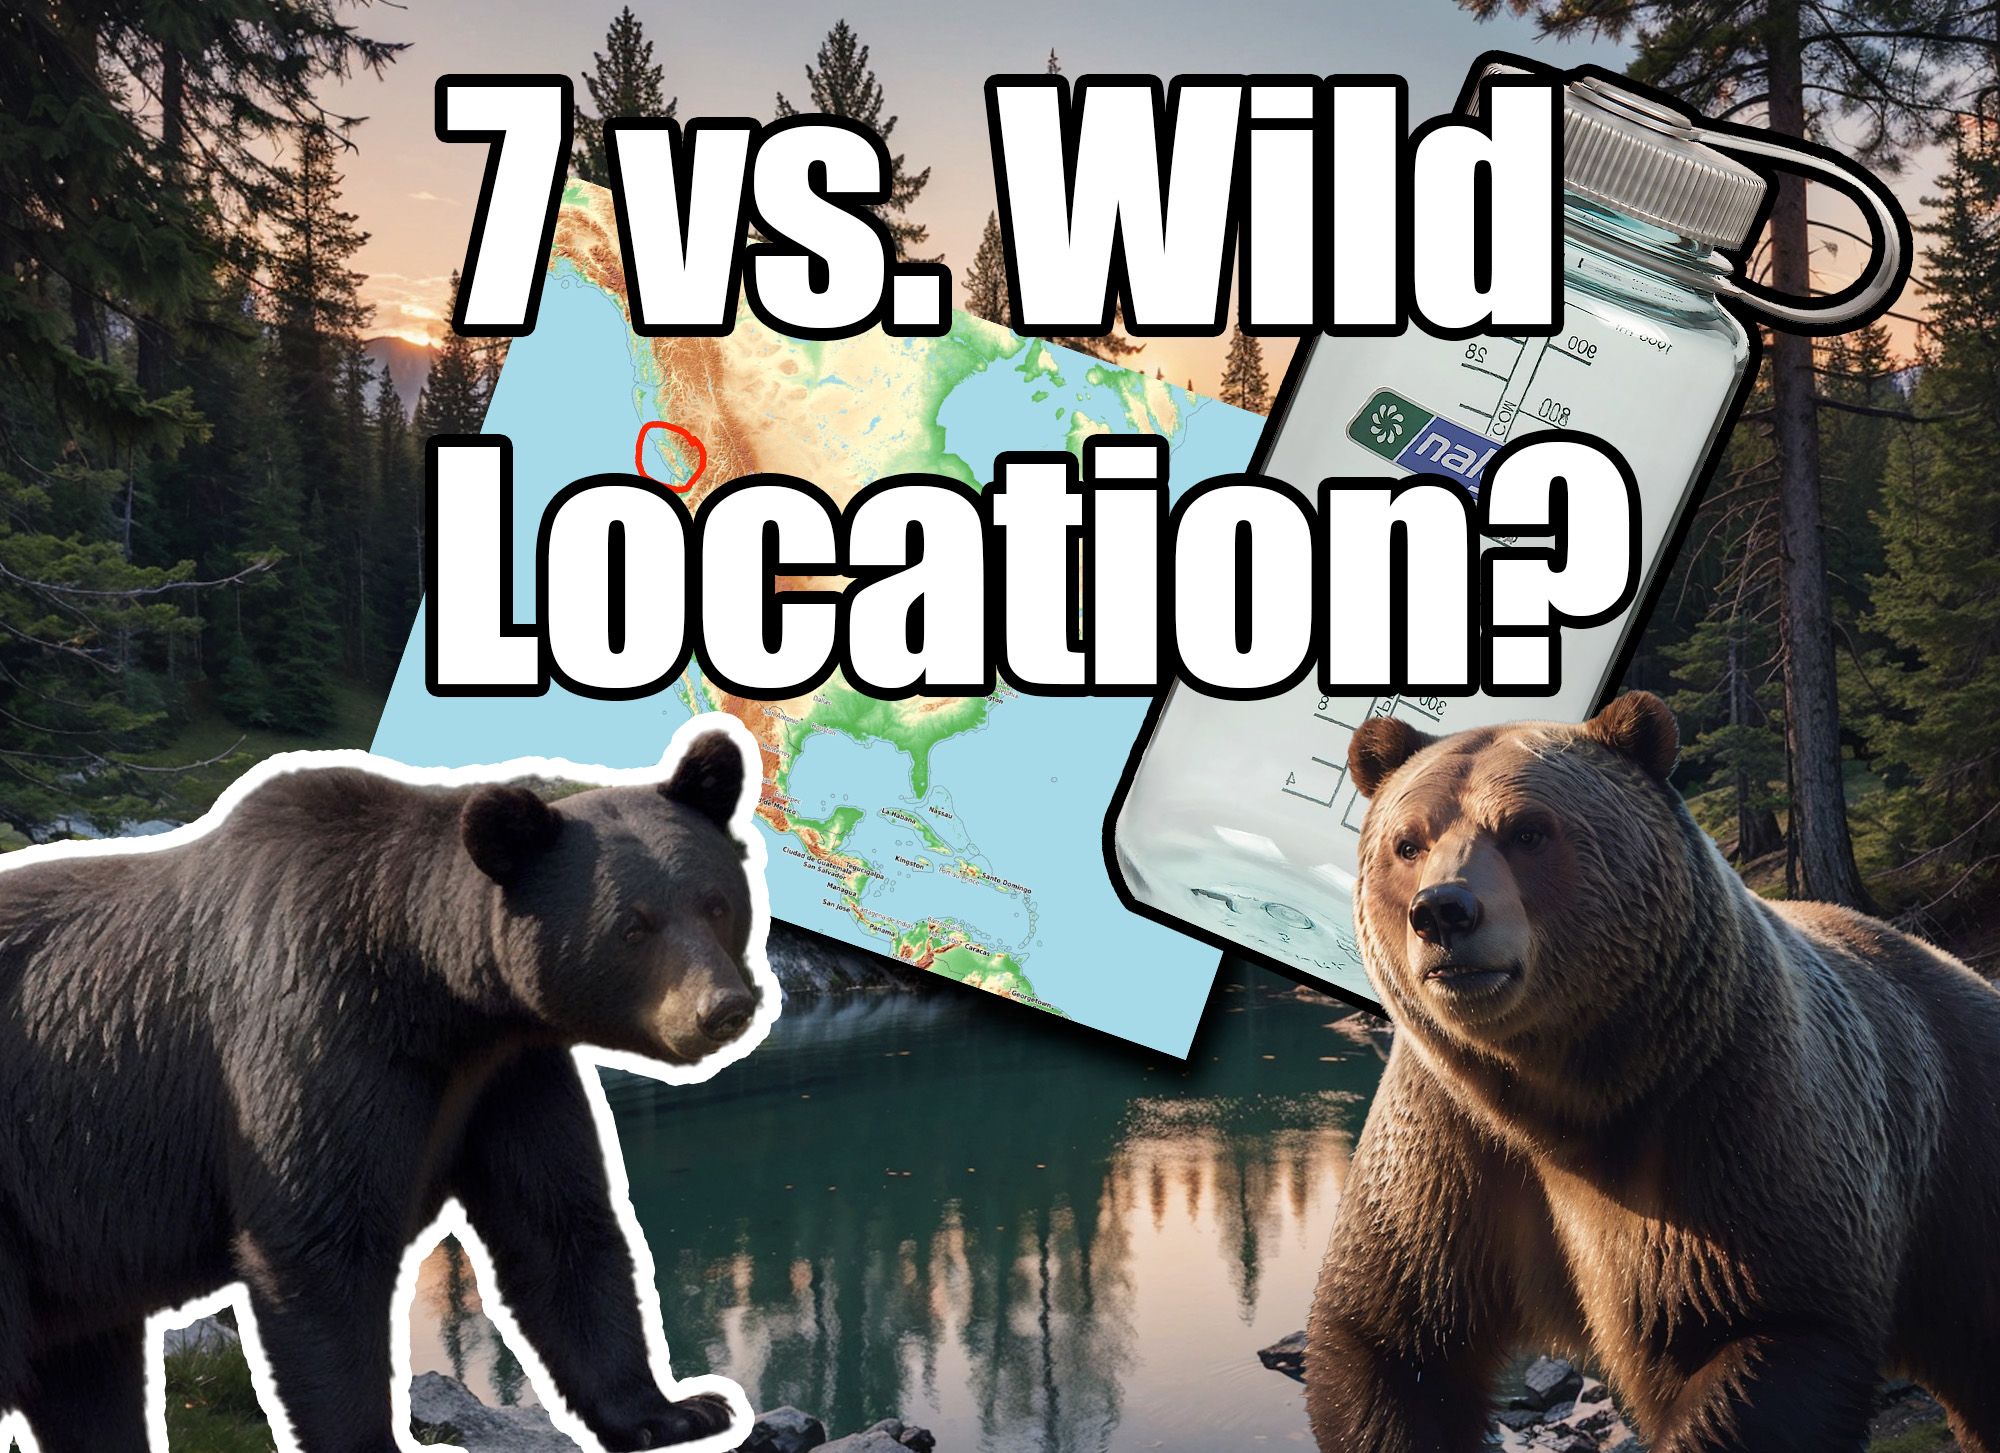 7 vs Wild: Reddit community finds presumed location of participants